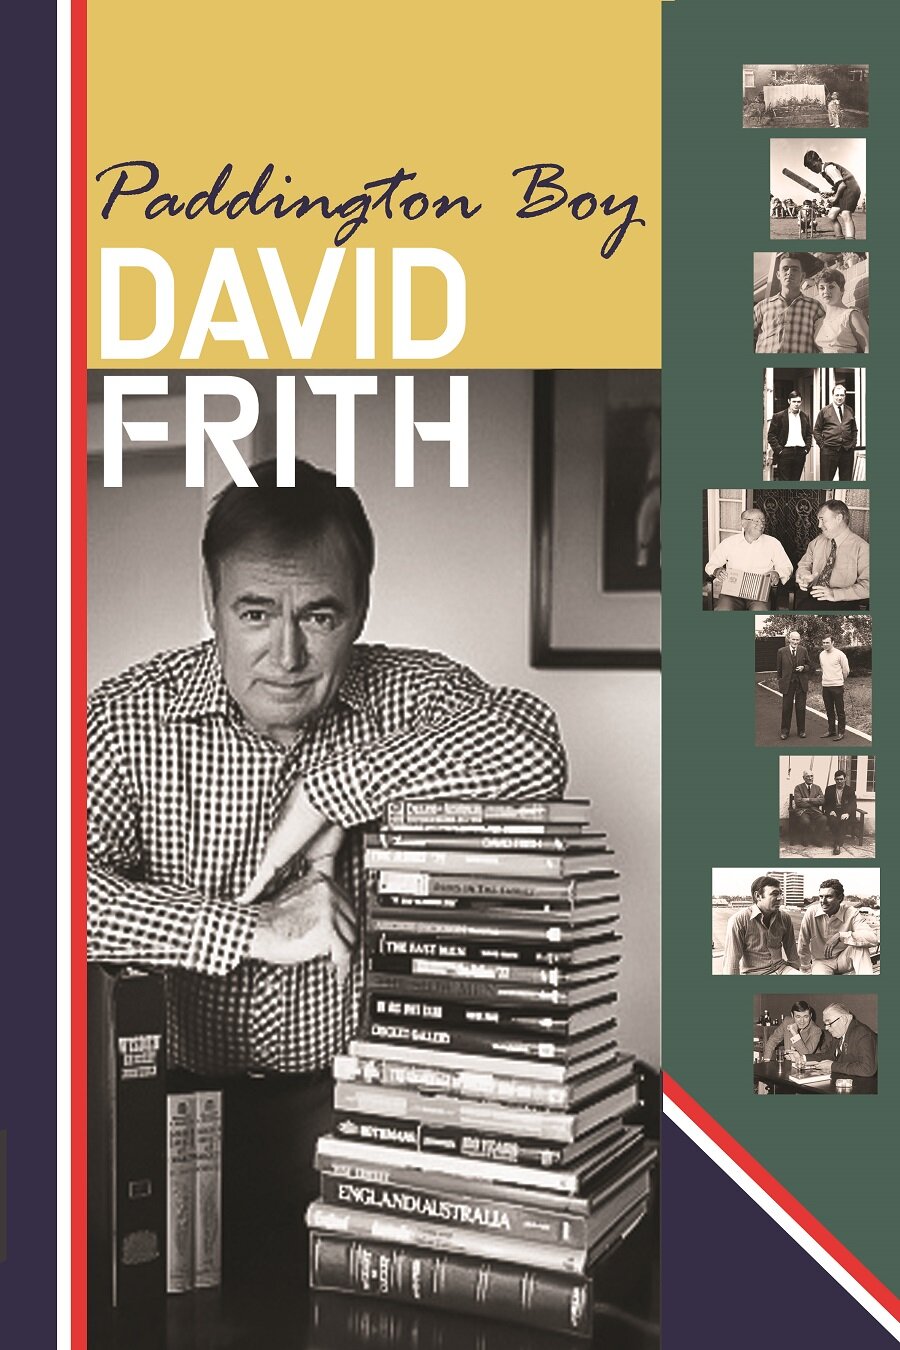  Releasing May: David Frith’s new biography Paddington Boy 